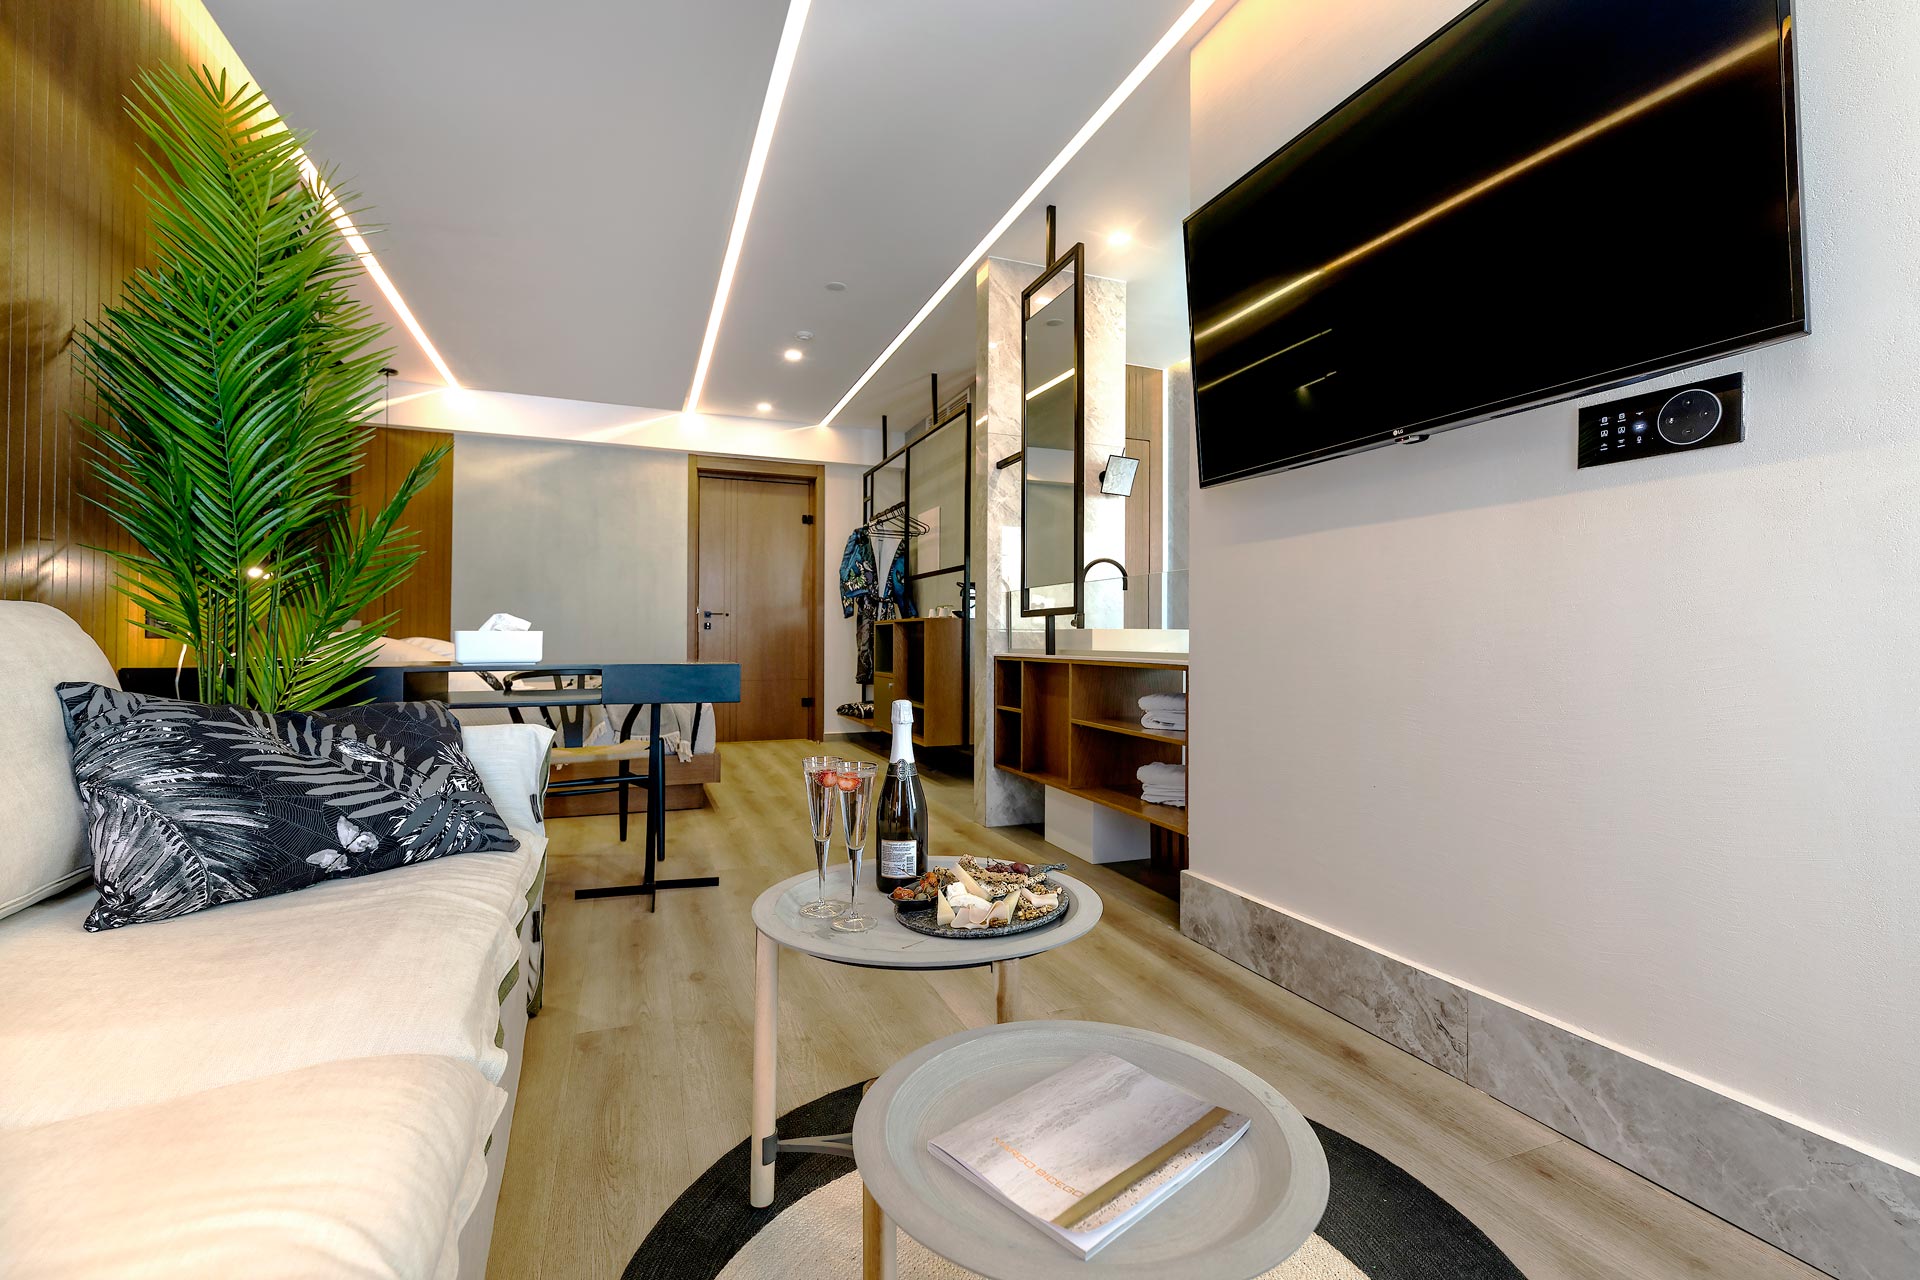 Dyo Suites Luxury Boutique Hotel Rethymno Crete - Selenium Suite